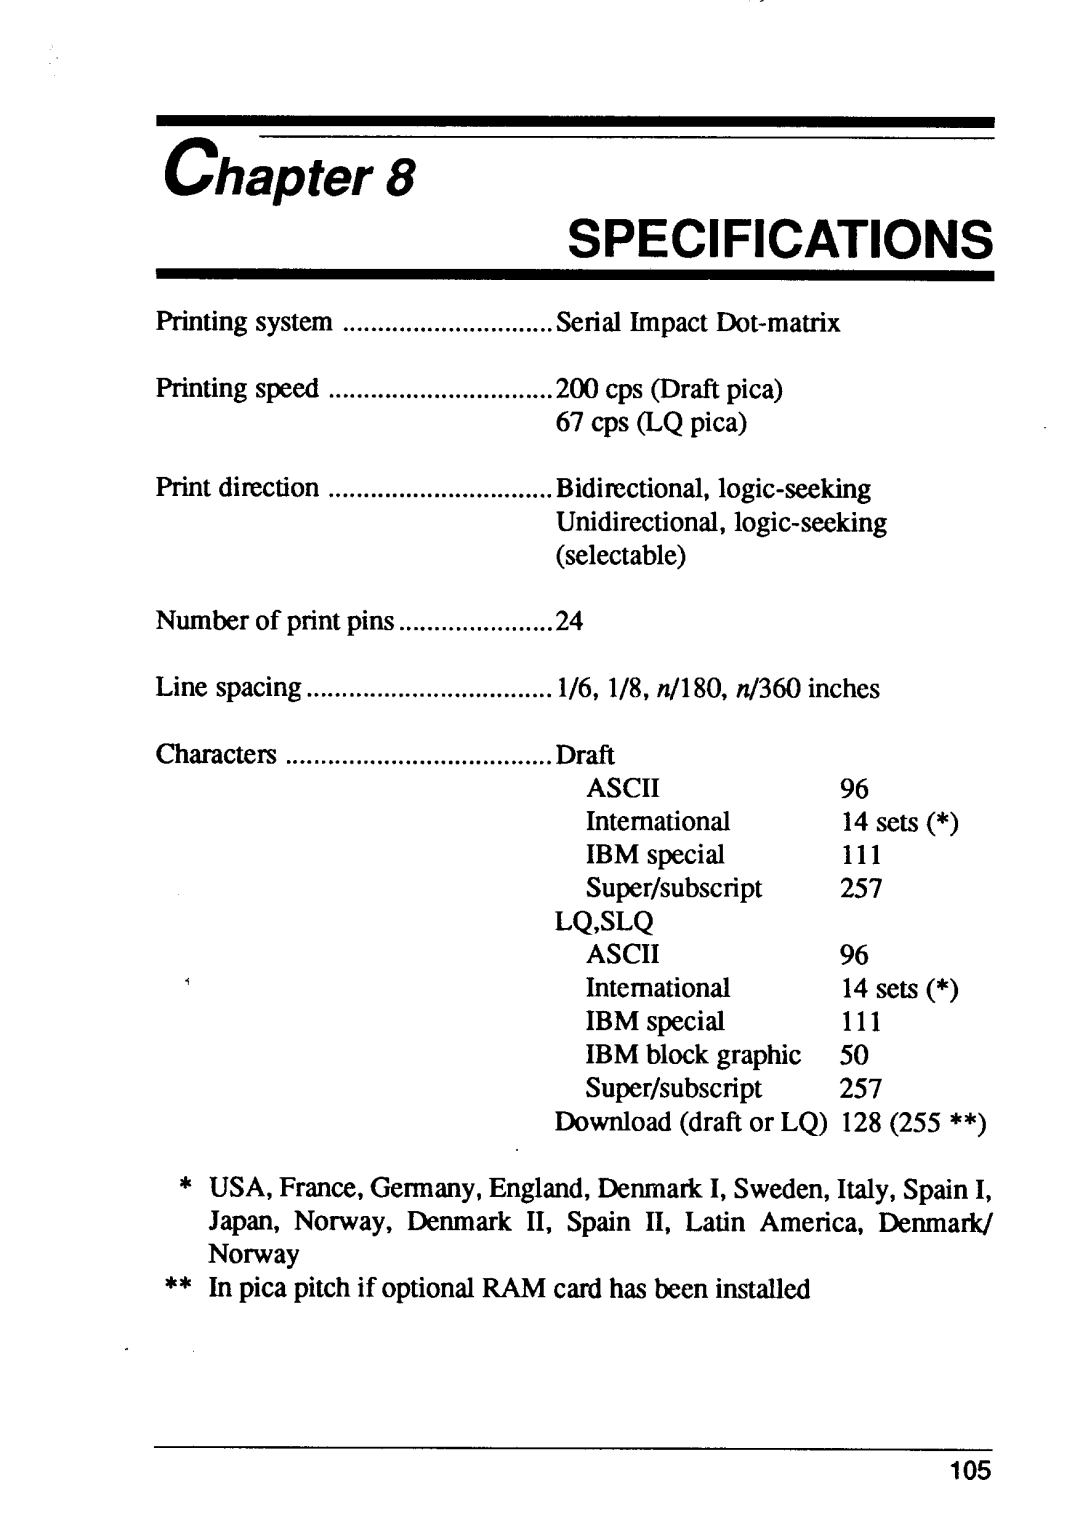 Star Micronics XB24-15, XB24-10 user manual chapter, Specifications, Lqslq 